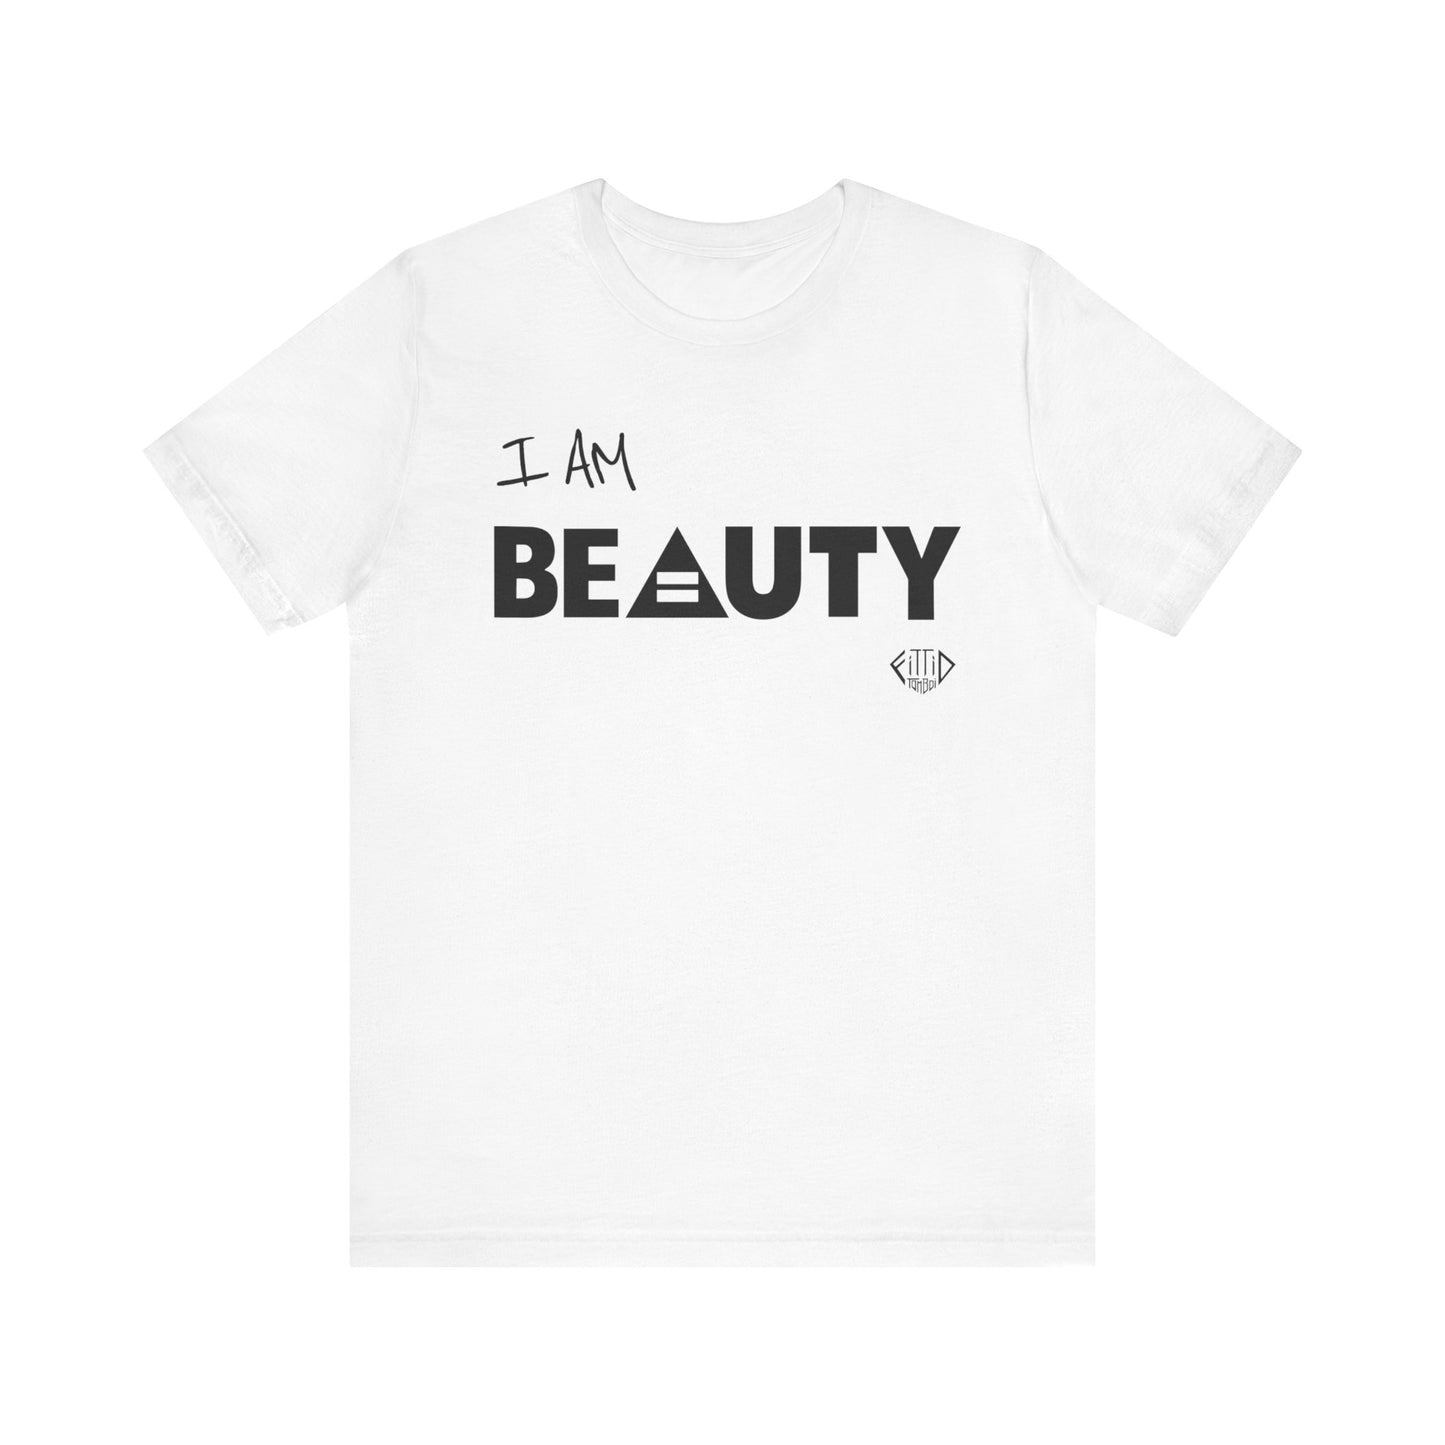 I AM BEAUTY Unisex T-shirt - 3 Color Options